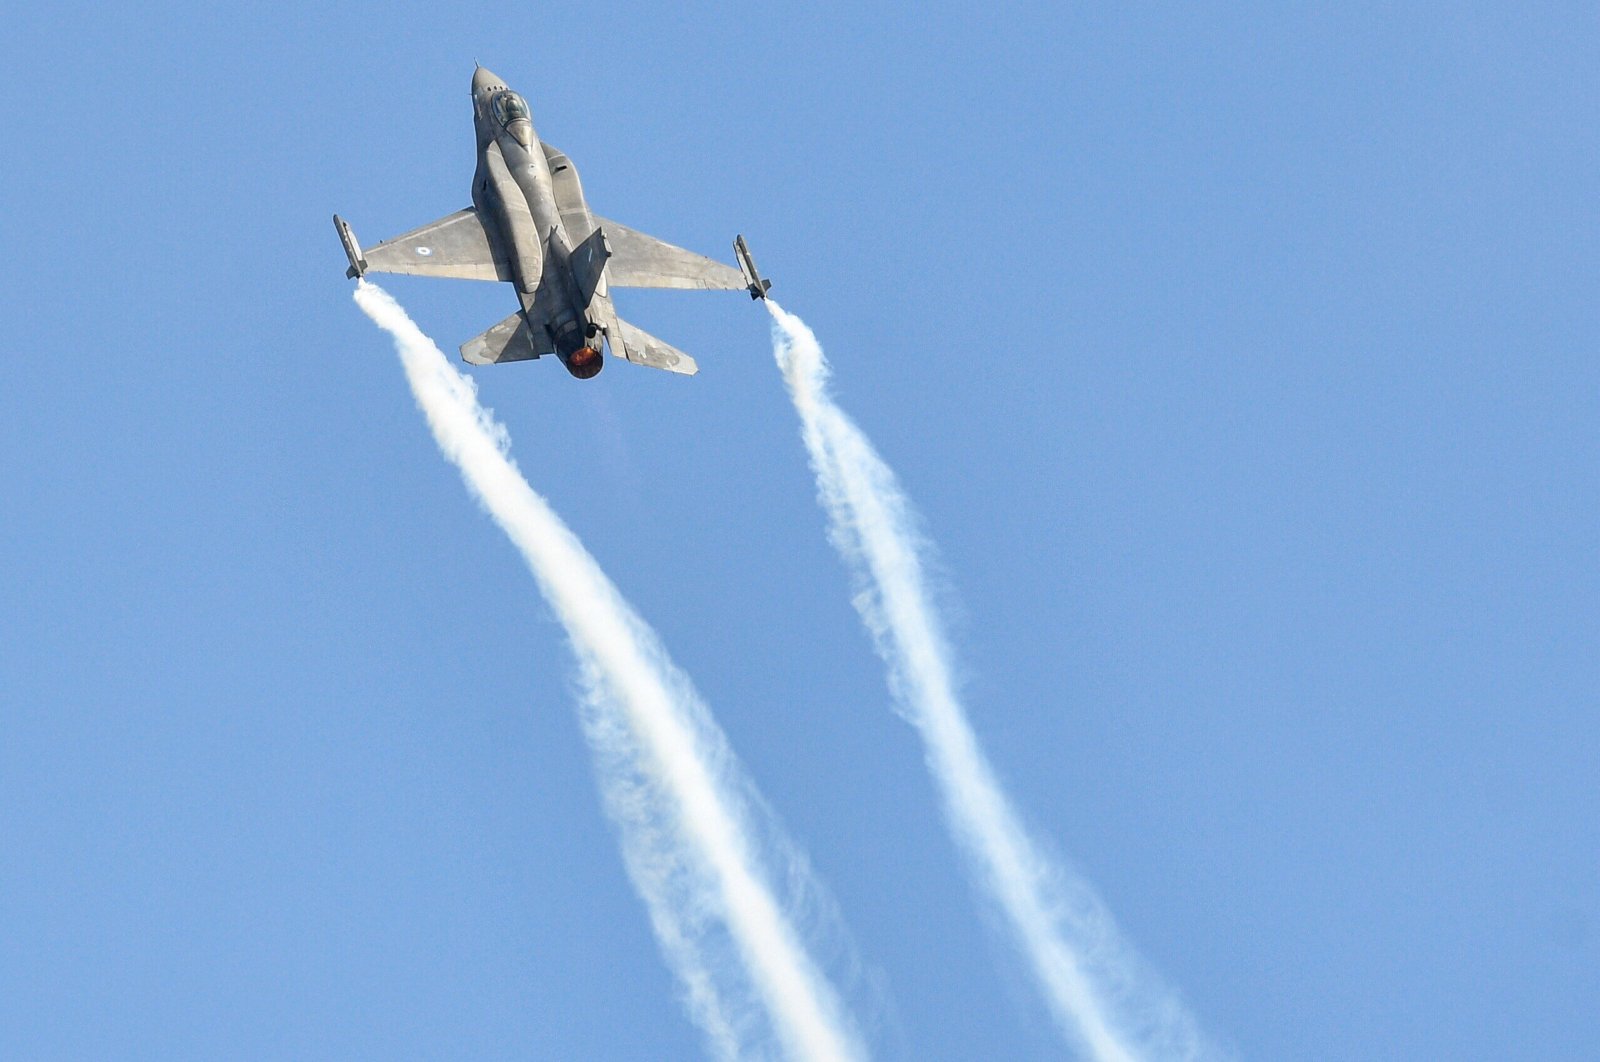 Sale of F-16s to Türkiye not linked to Sweden’s NATO membership: US